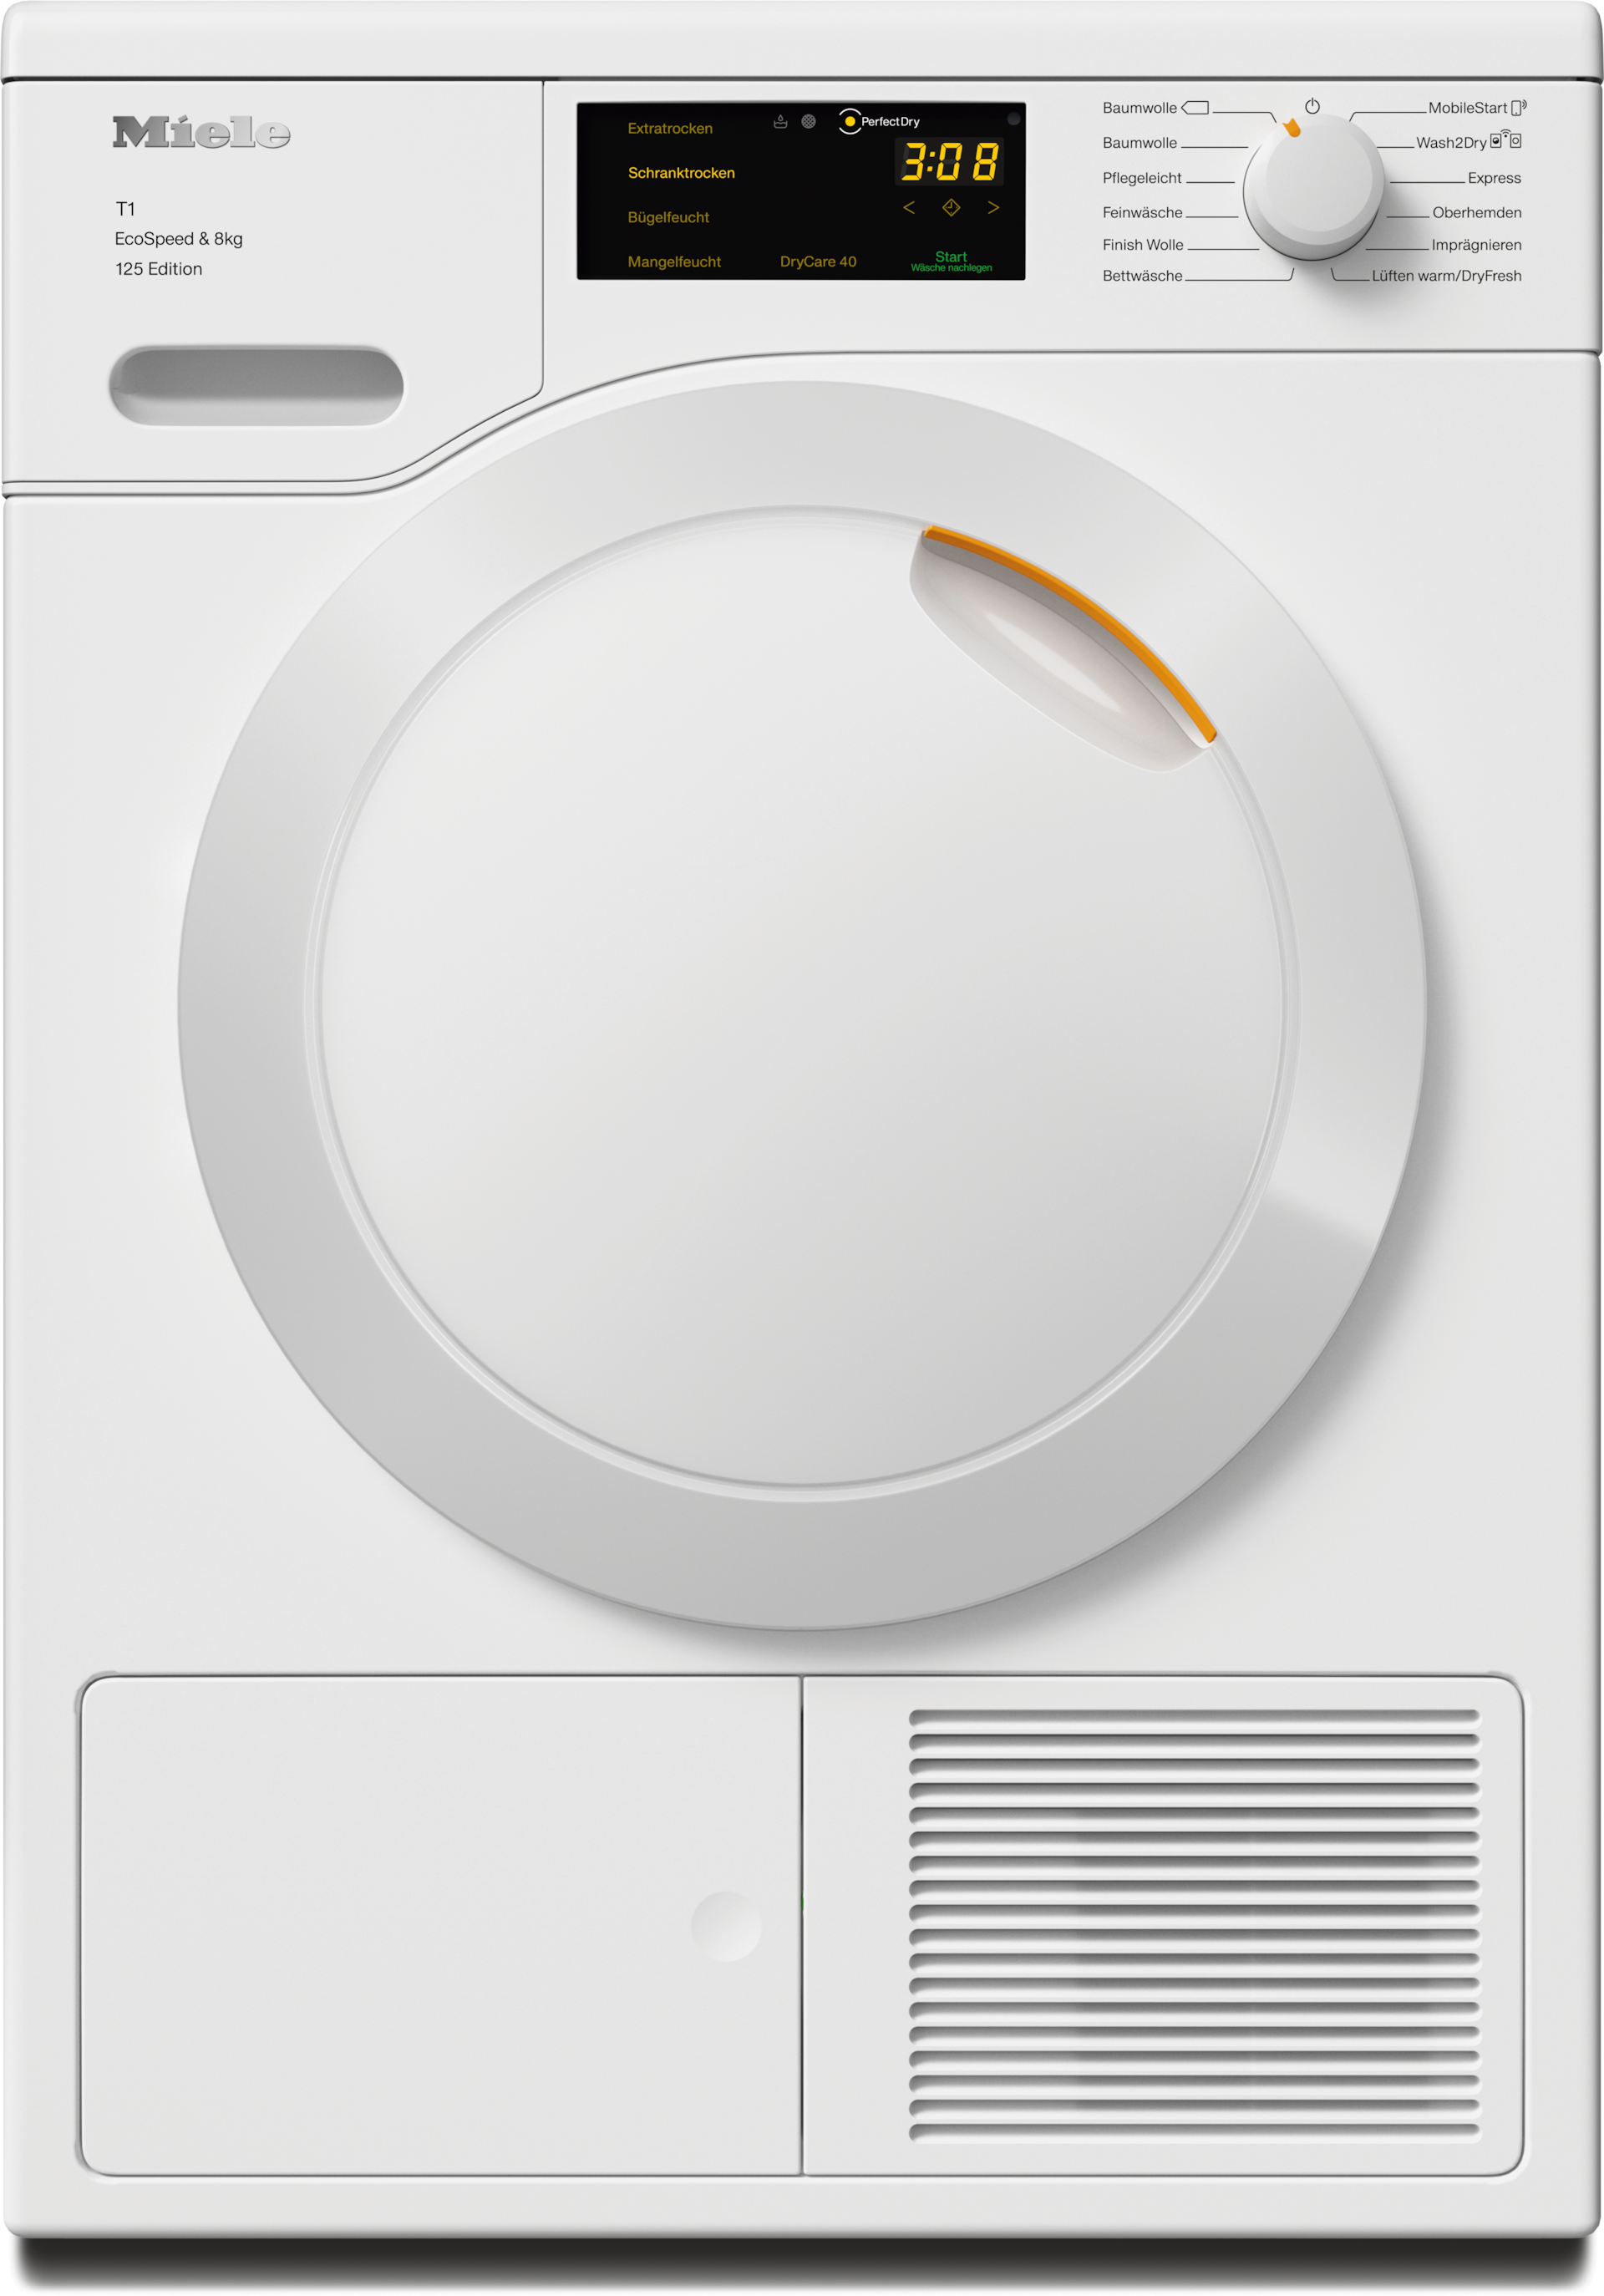 Tumble dryers - TCC660WP 125 Edition Lopoč bijela - 1